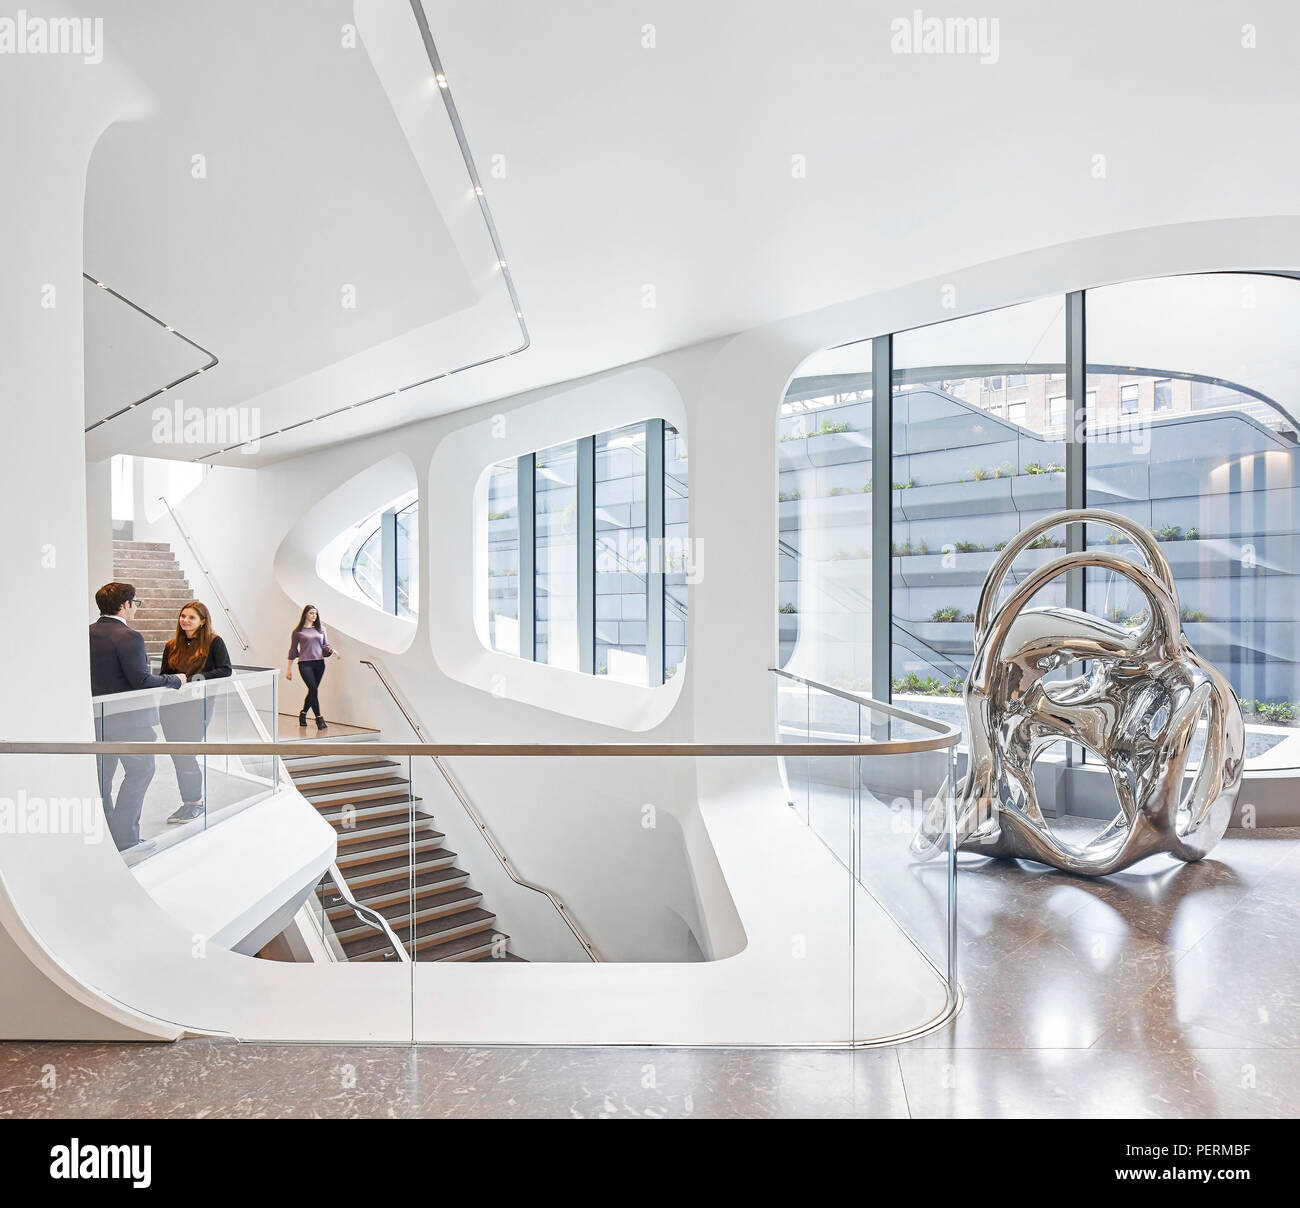 Interior view. 520 West 28th Street, New York City, United States. Architect: Zaha Hadid Architects, 2017. Stock Photo